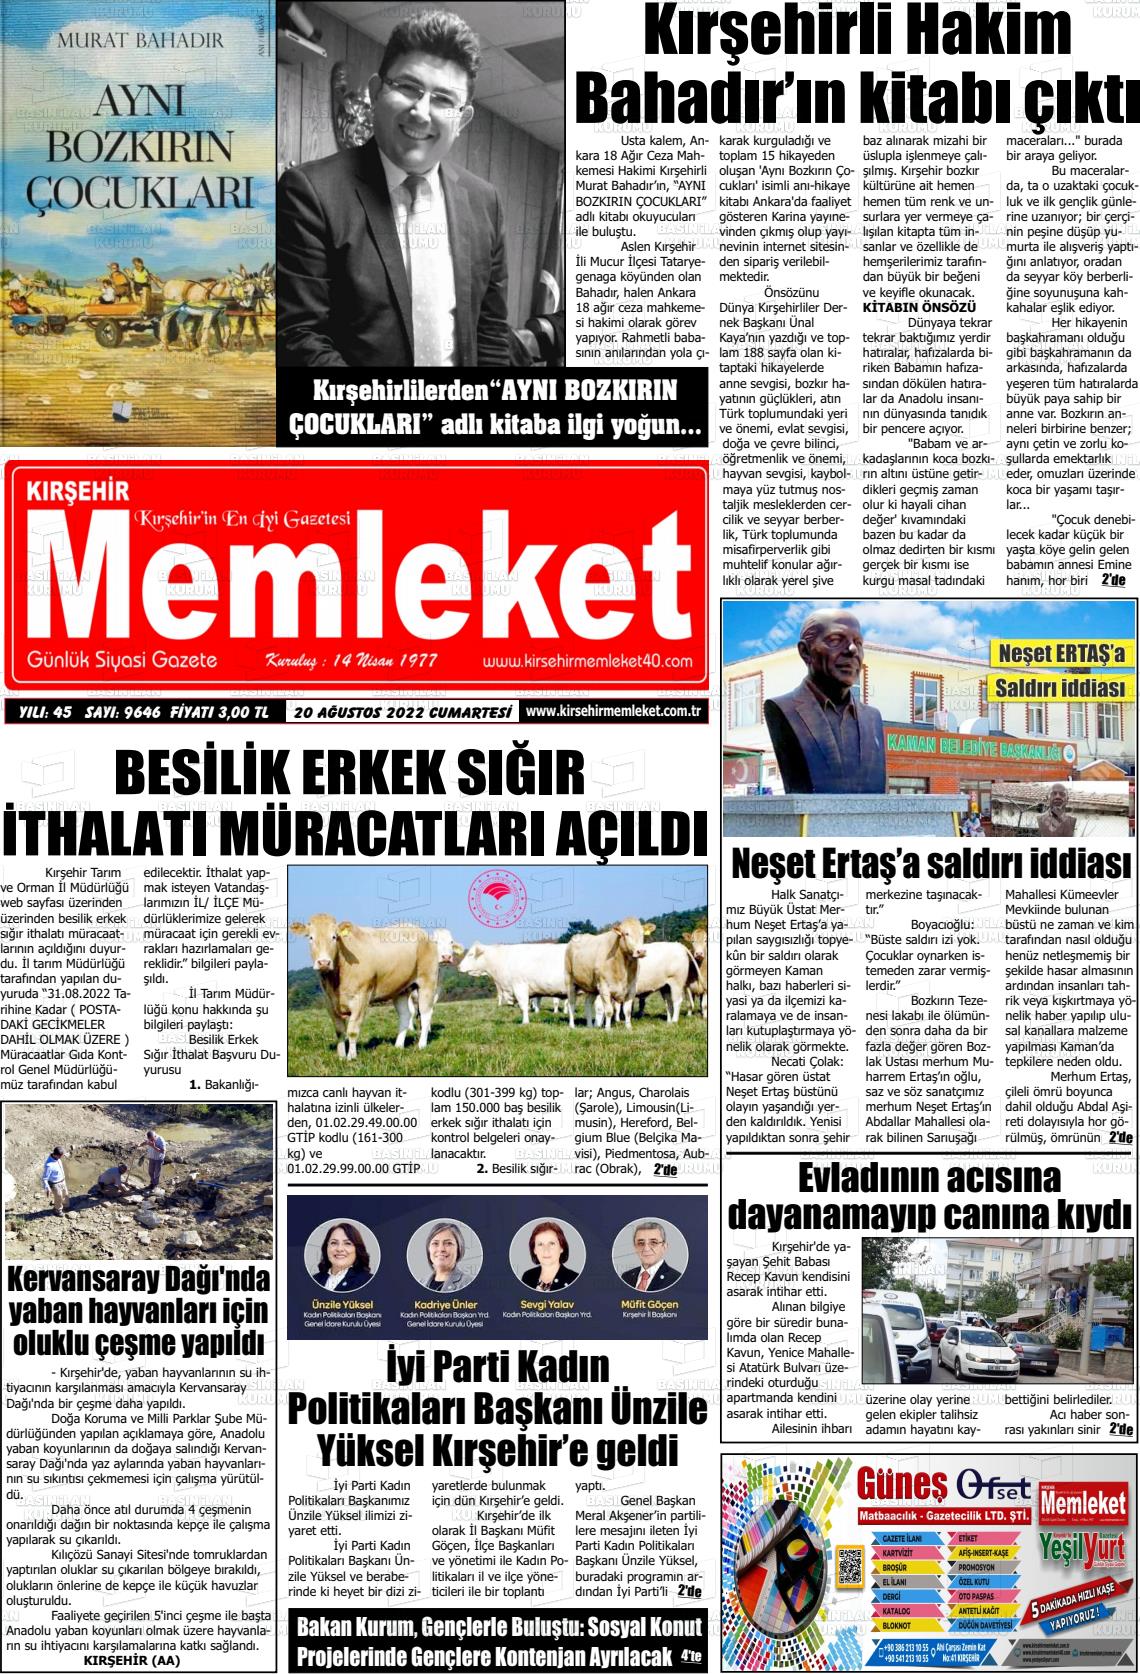 20 Ağustos 2022 Kırşehir Memleket Gazete Manşeti